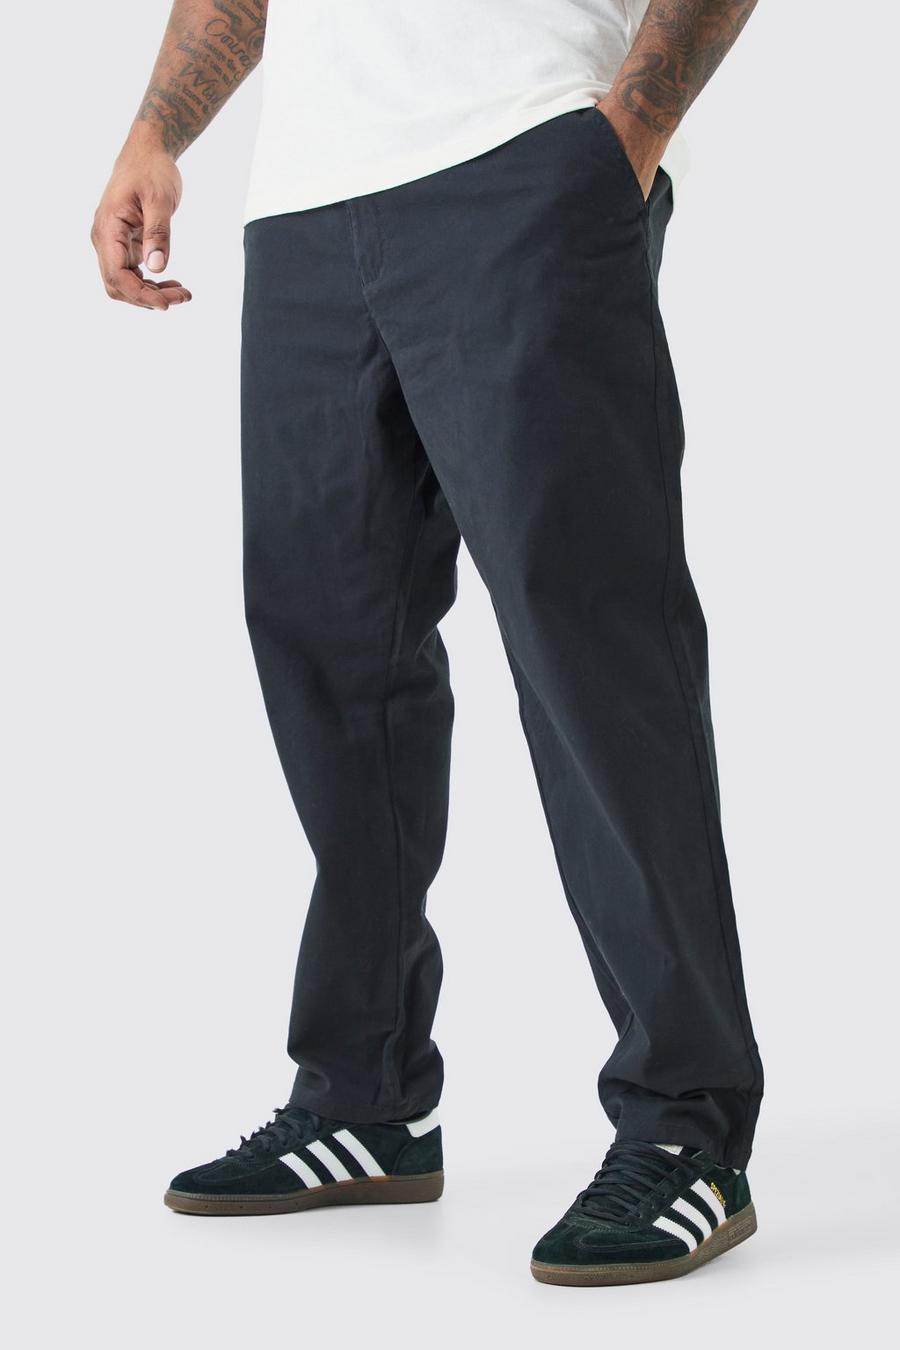 Grande taille - Pantalon chino slim à talle fixe, Black noir